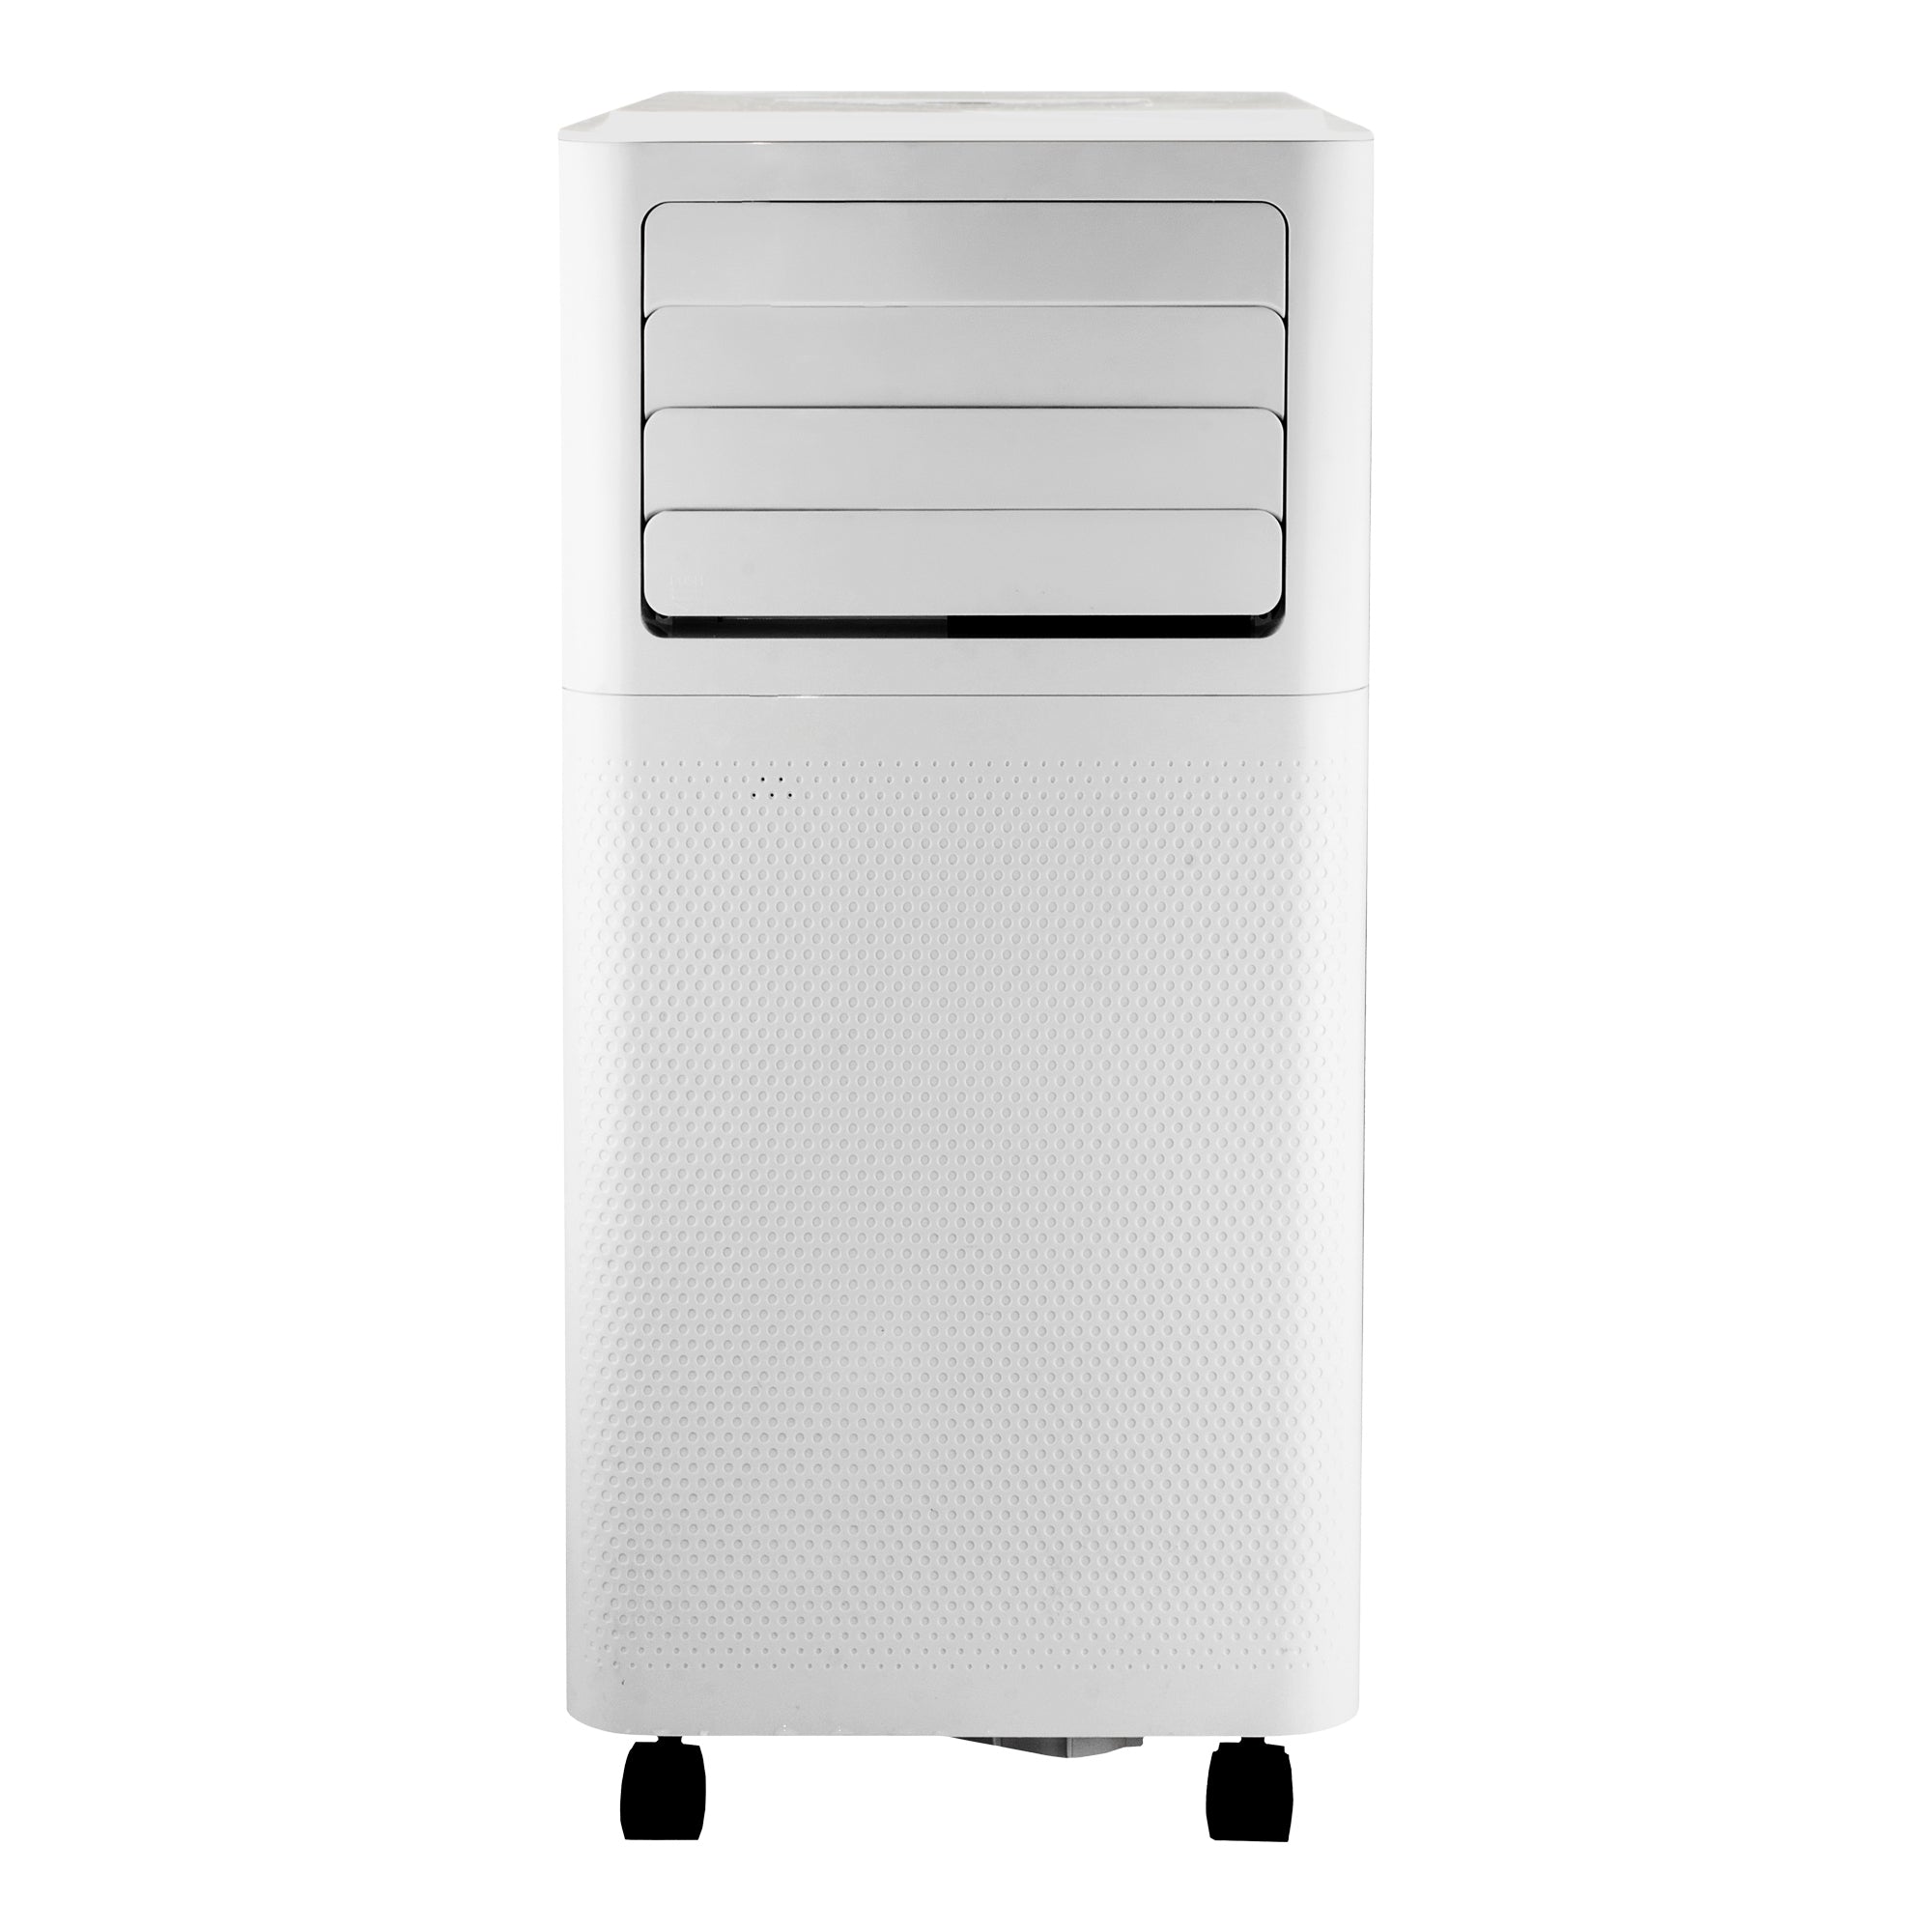 3-in-1 Portable Air Conditioner, Cooling, Fan & Dehumidifier, 7000 BTU